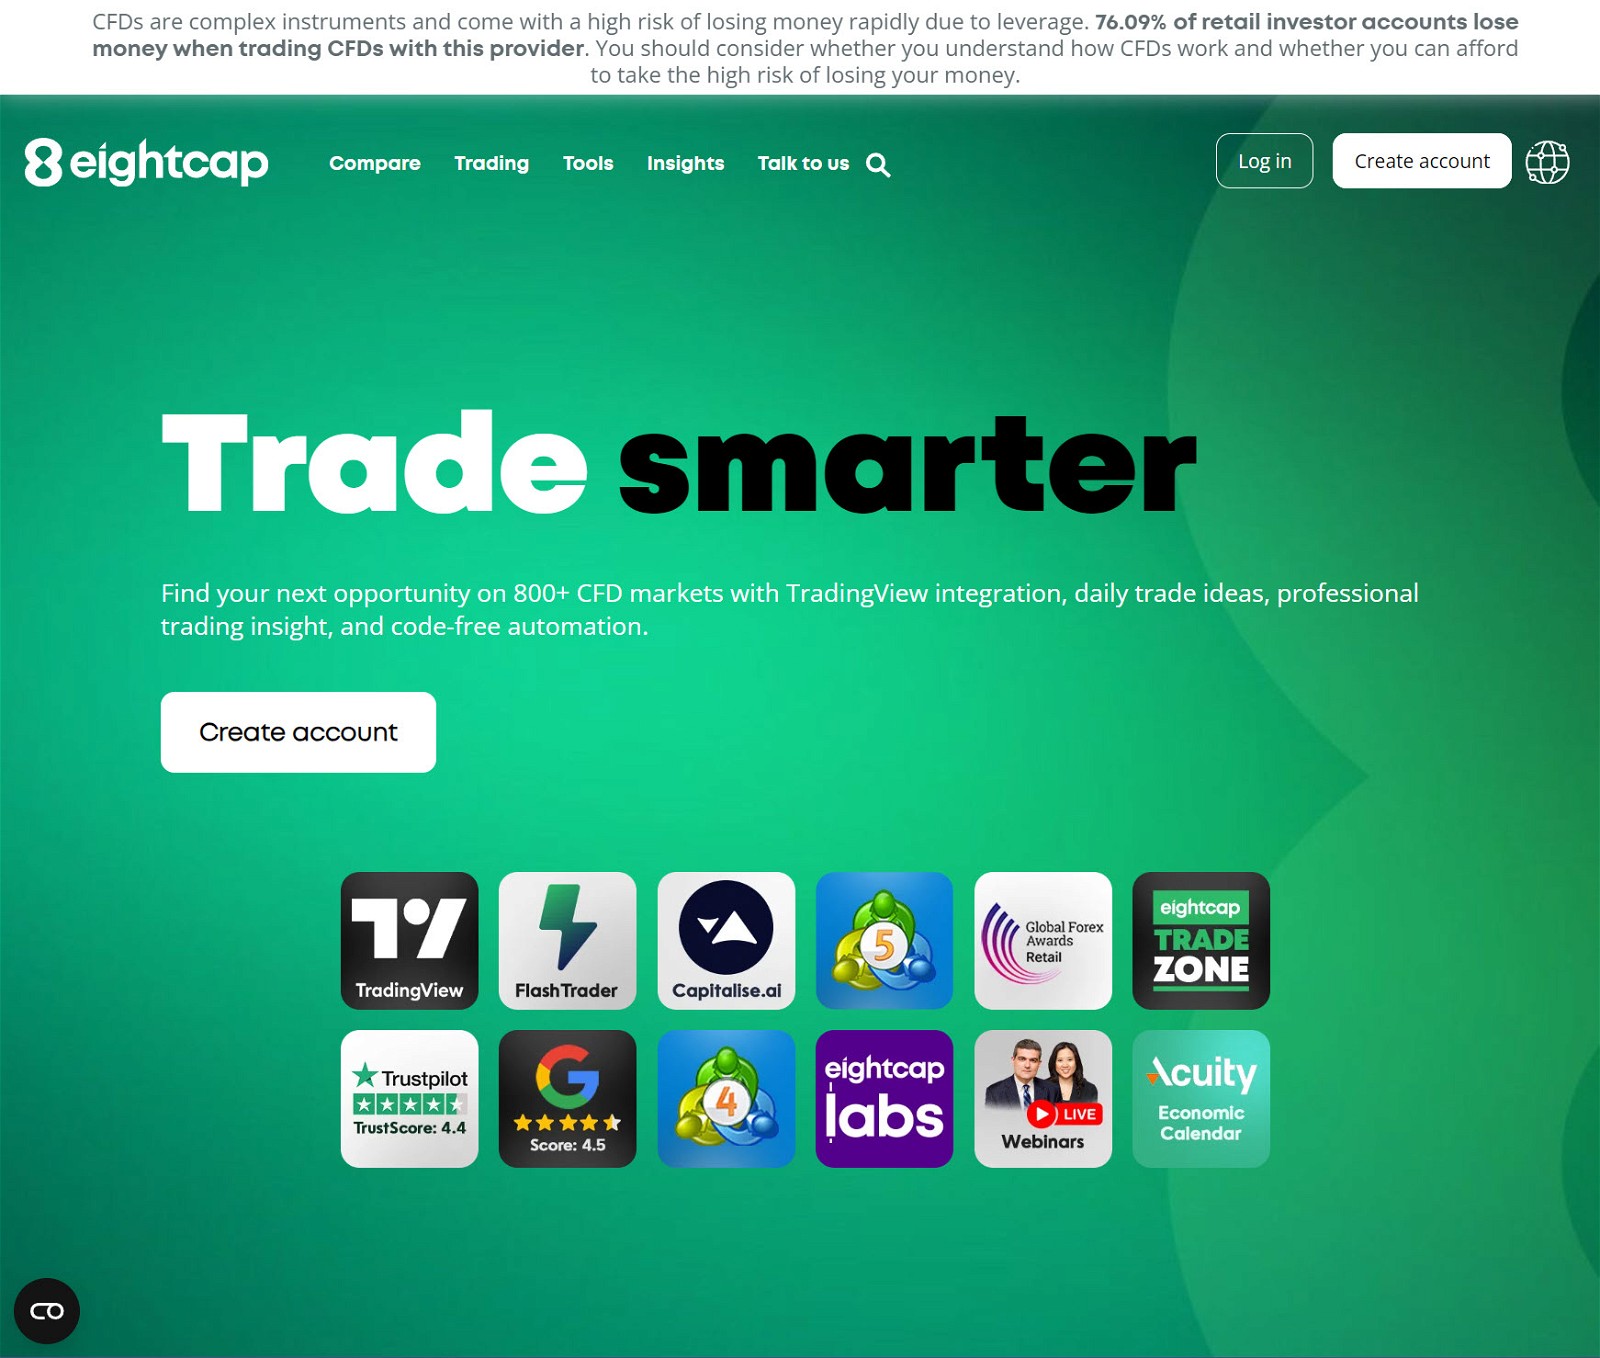 Eightcap Partners homepage